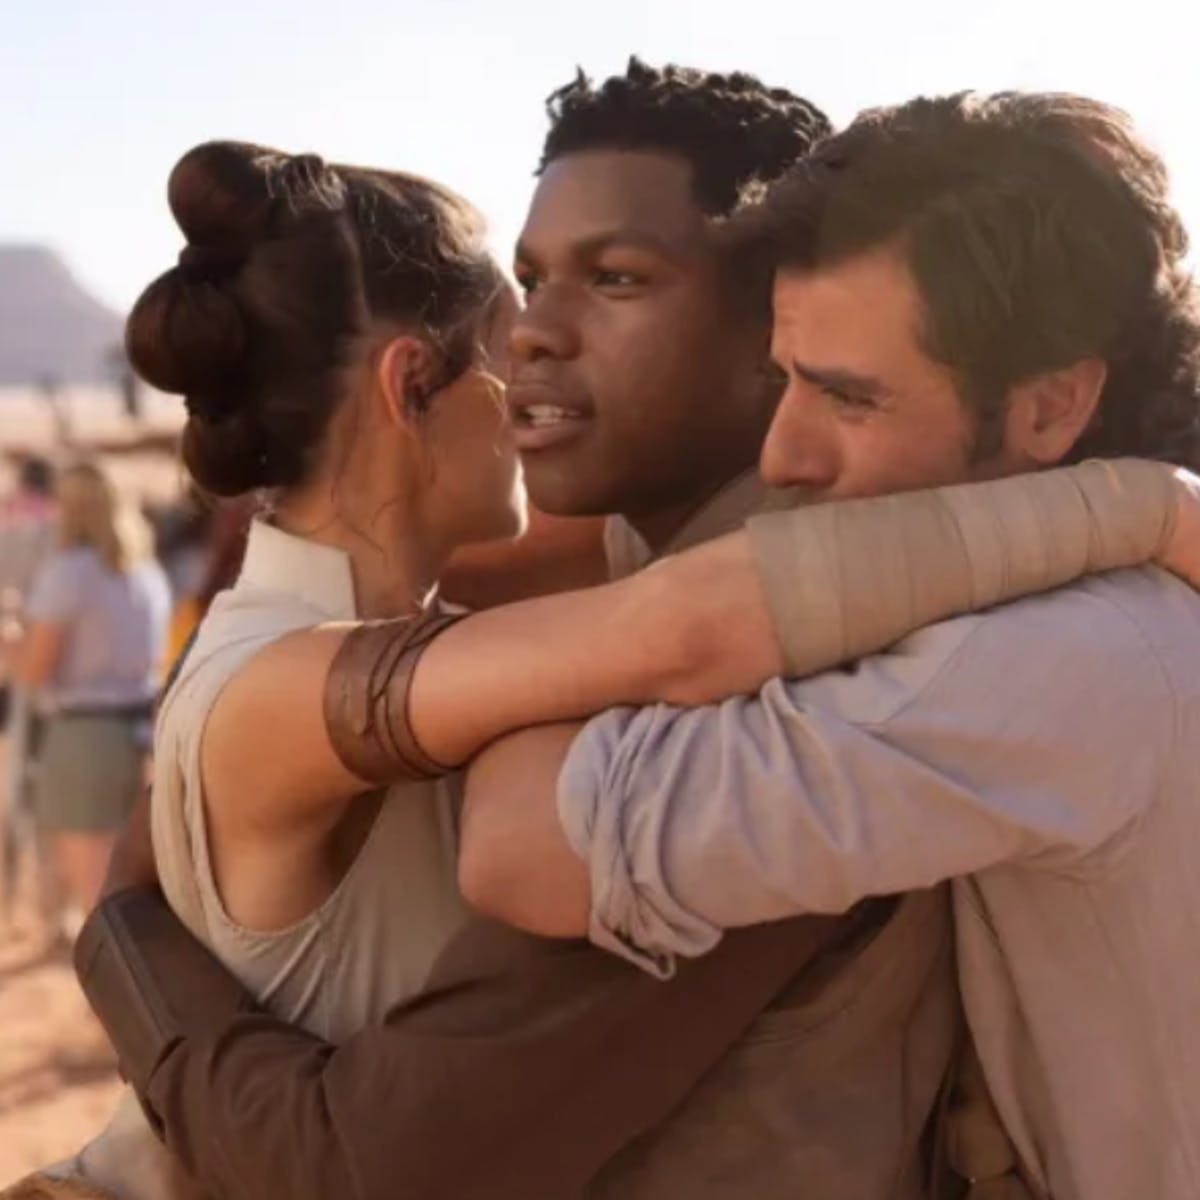 Star Wars: The Rise of Skywalker': Episode 9 Trailer, Title Revealed